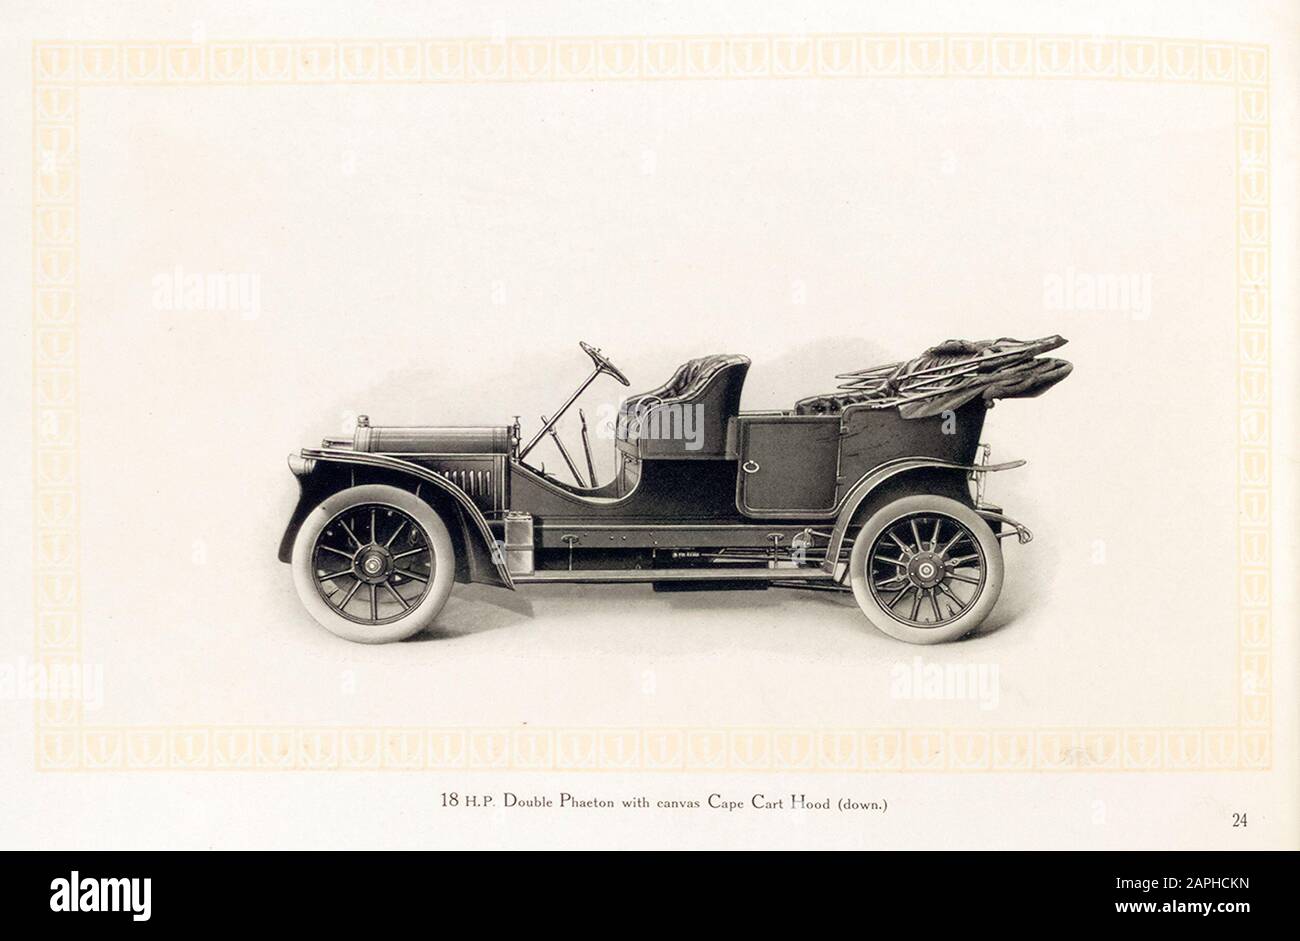 Auto a motore Benz, 18 hp Double Phaeton Vintage con cappotta cape Cart (giù), dal catalogo commerciale Benz & Co, Illustration, 1909 Foto Stock